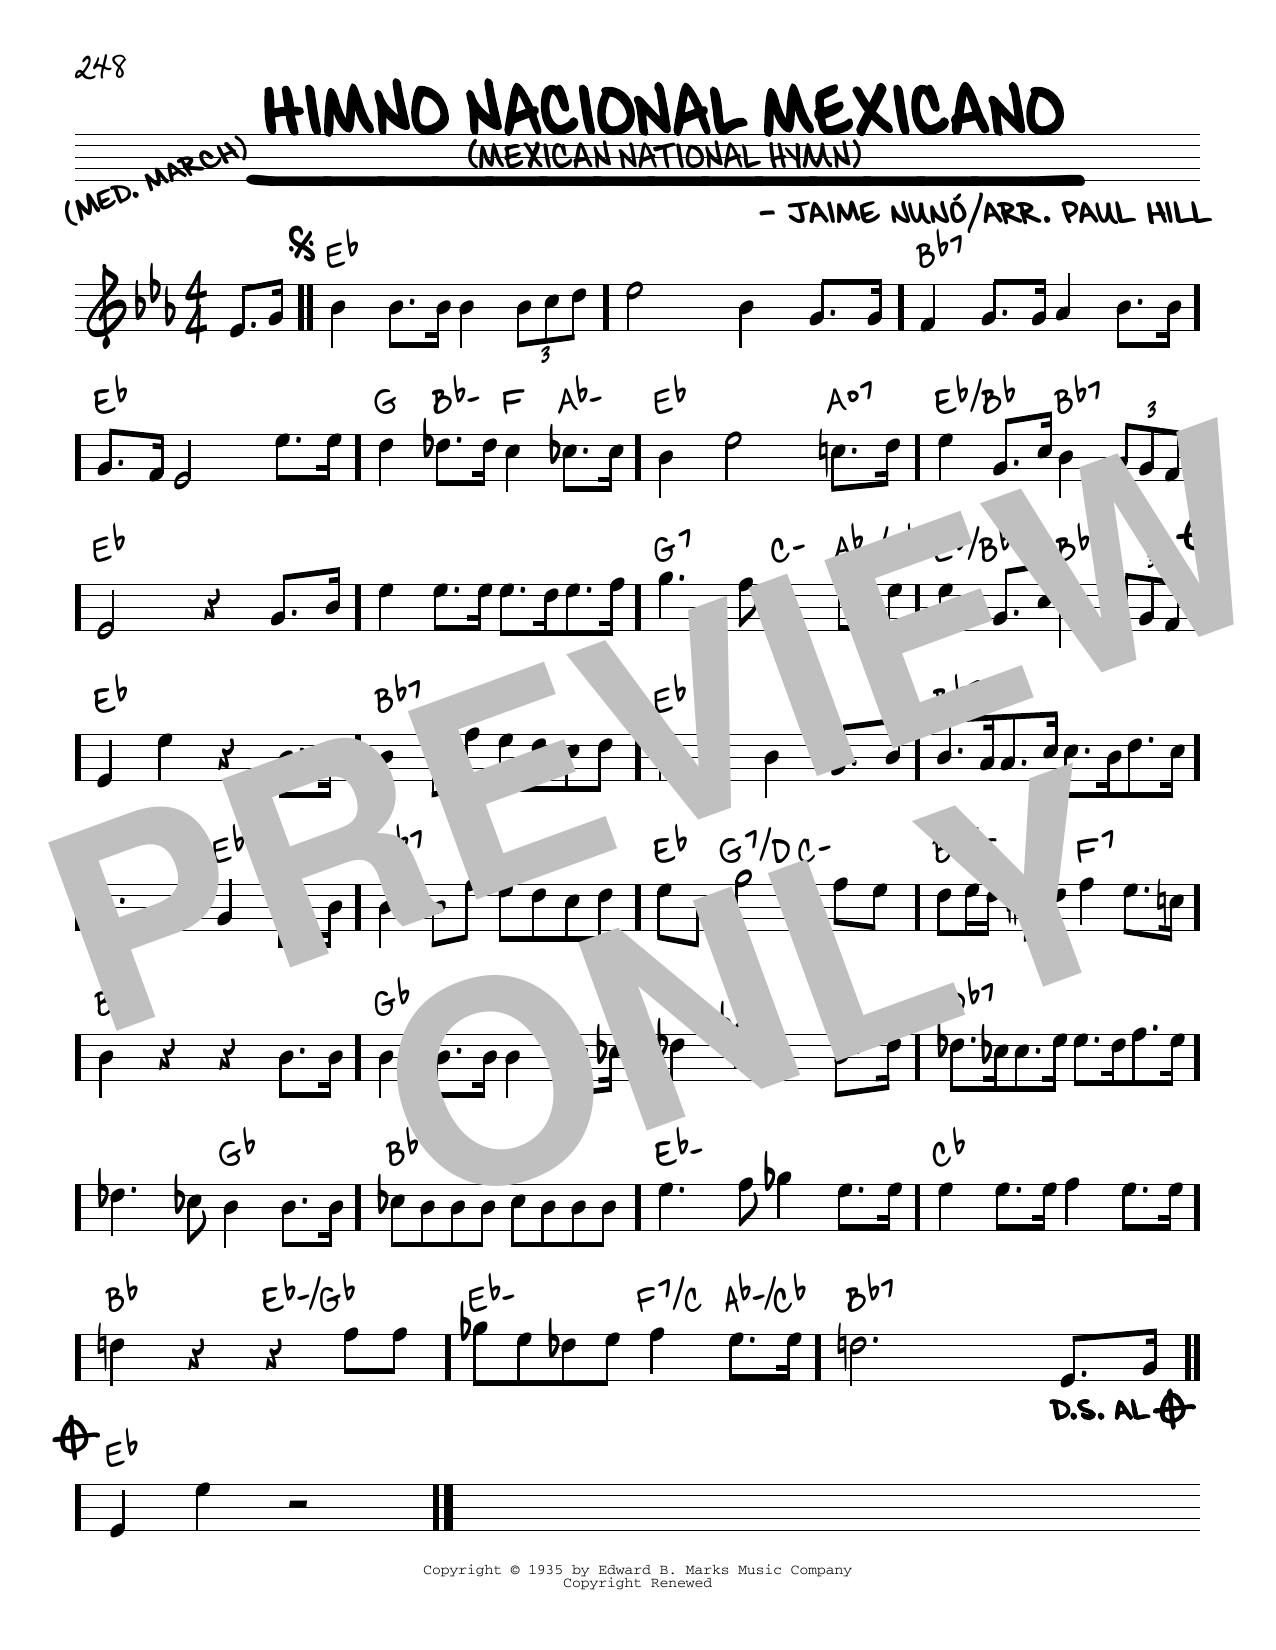 Jaime Nuno Himno Nacional Mexicano (Mexican National Hymn) Sheet Music Notes & Chords for Real Book – Melody & Chords - Download or Print PDF